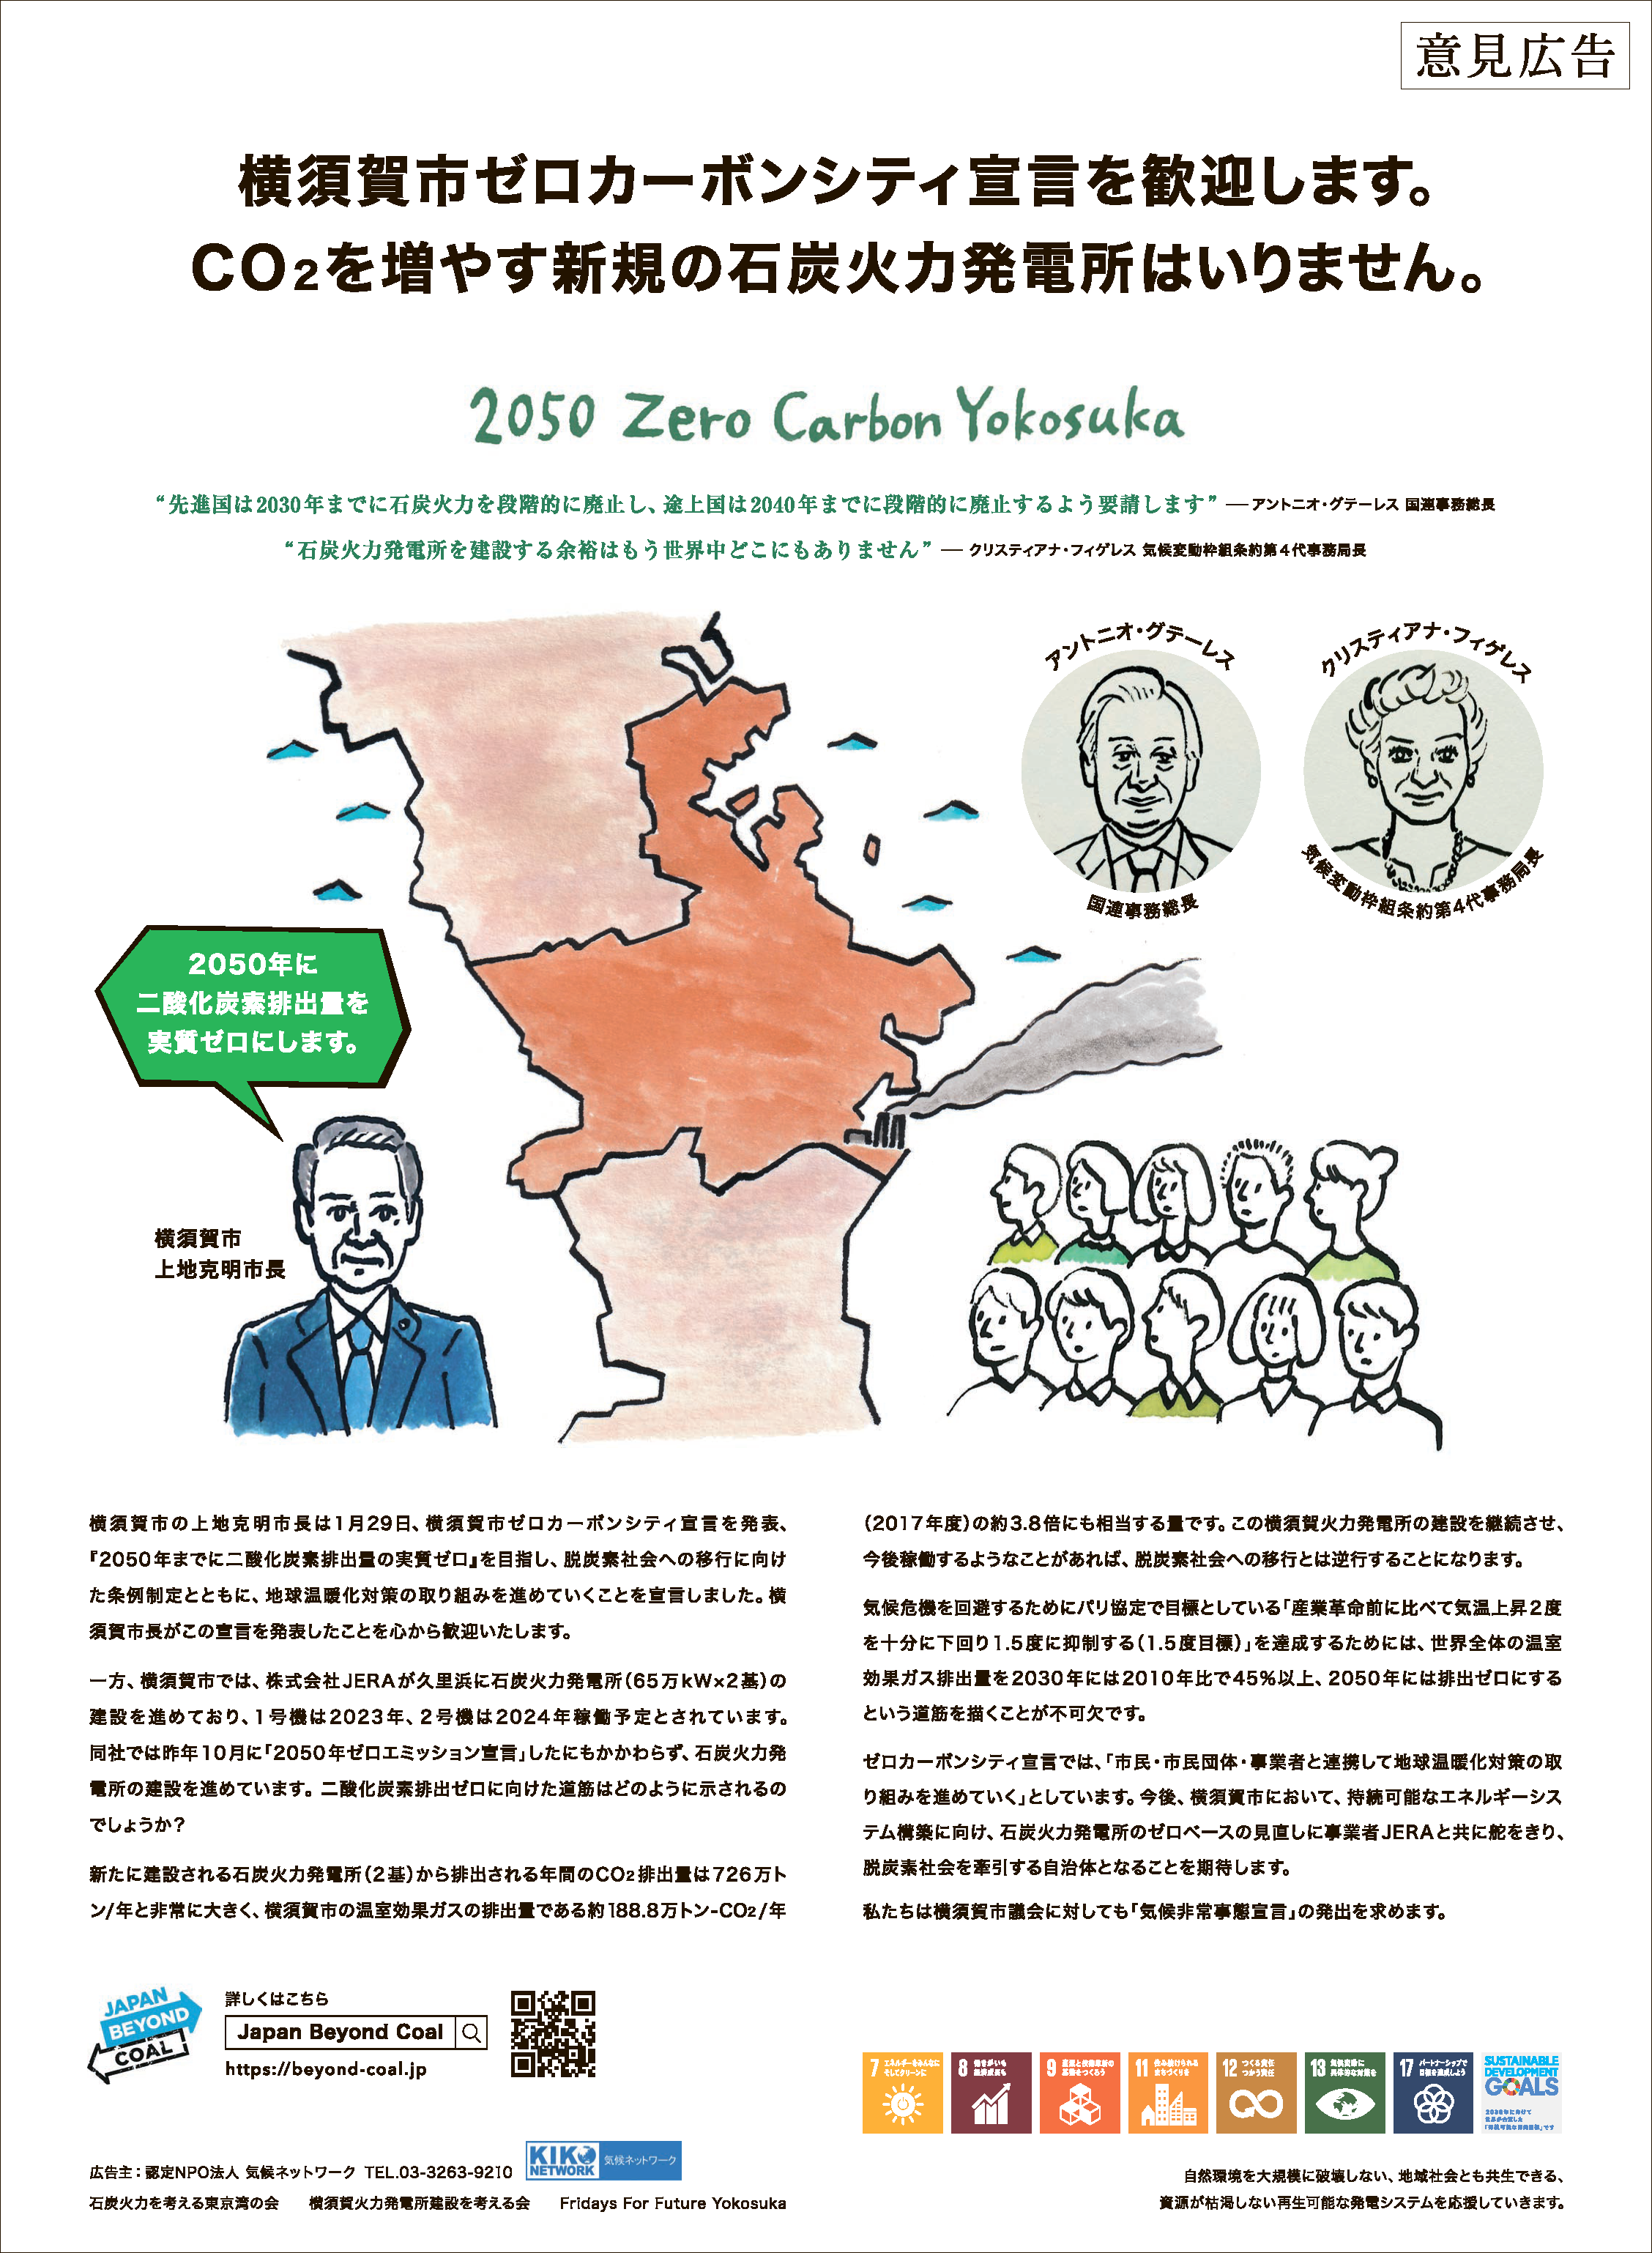 【News】3 Local Civil Society Groups Take Out Newspaper Ad to say “2050 Zero Carbon Yokosuka”